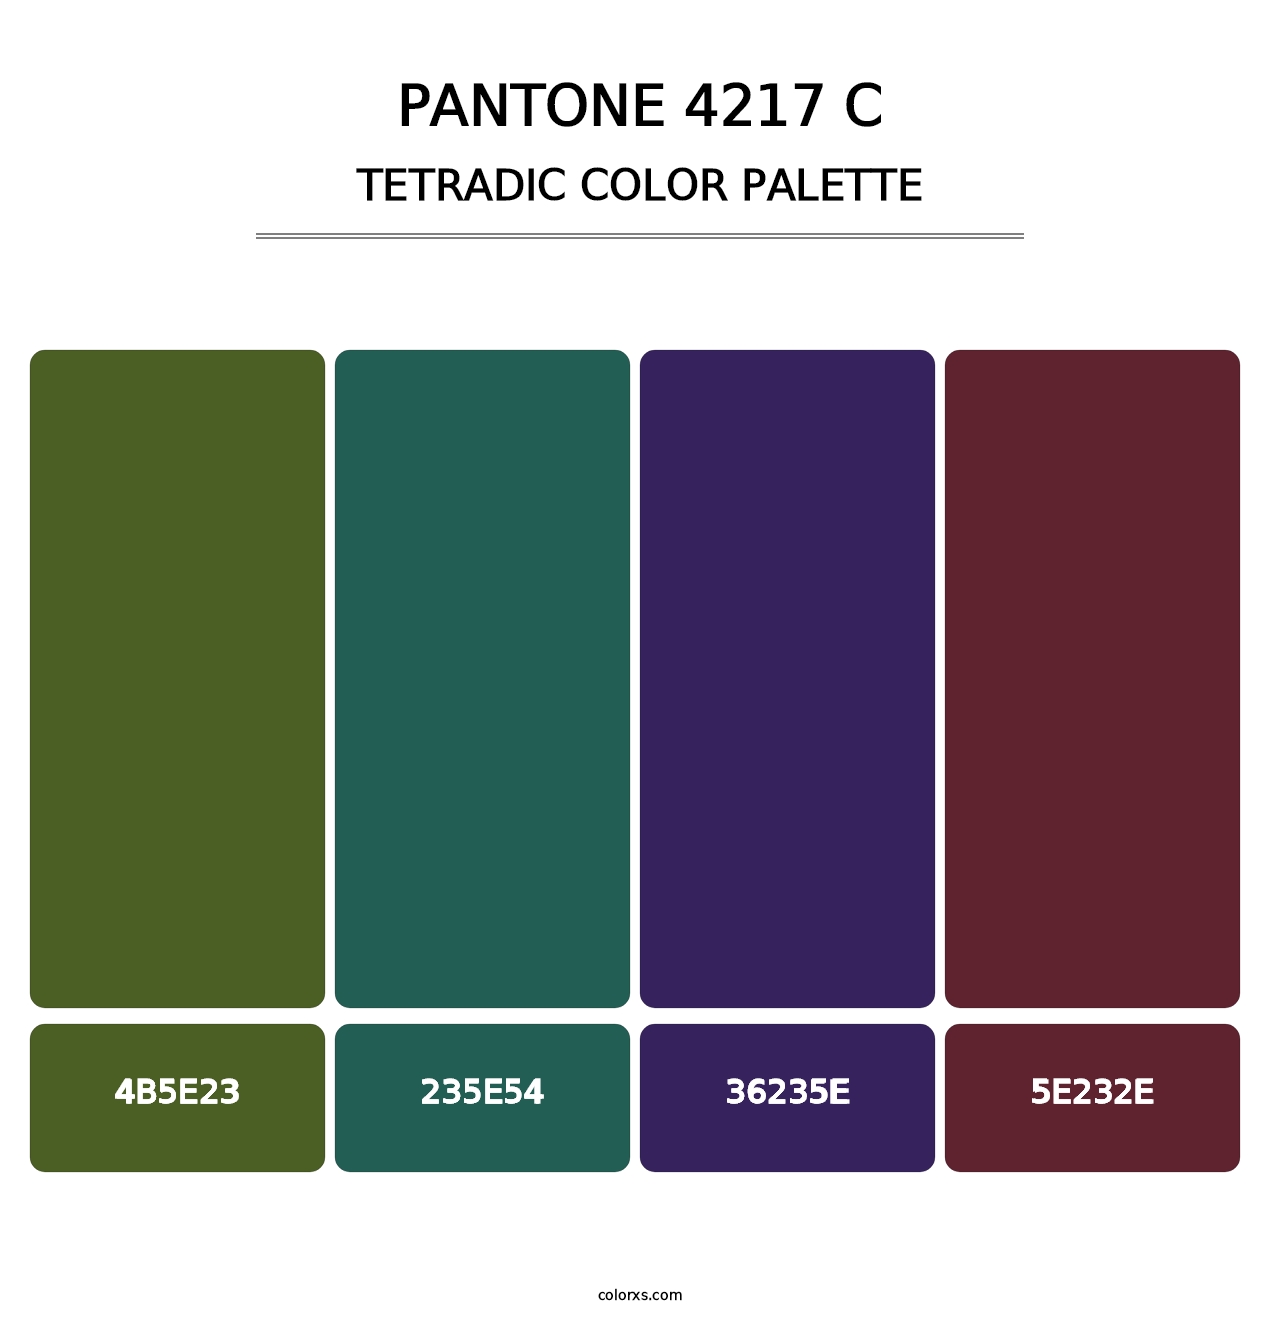 PANTONE 4217 C - Tetradic Color Palette